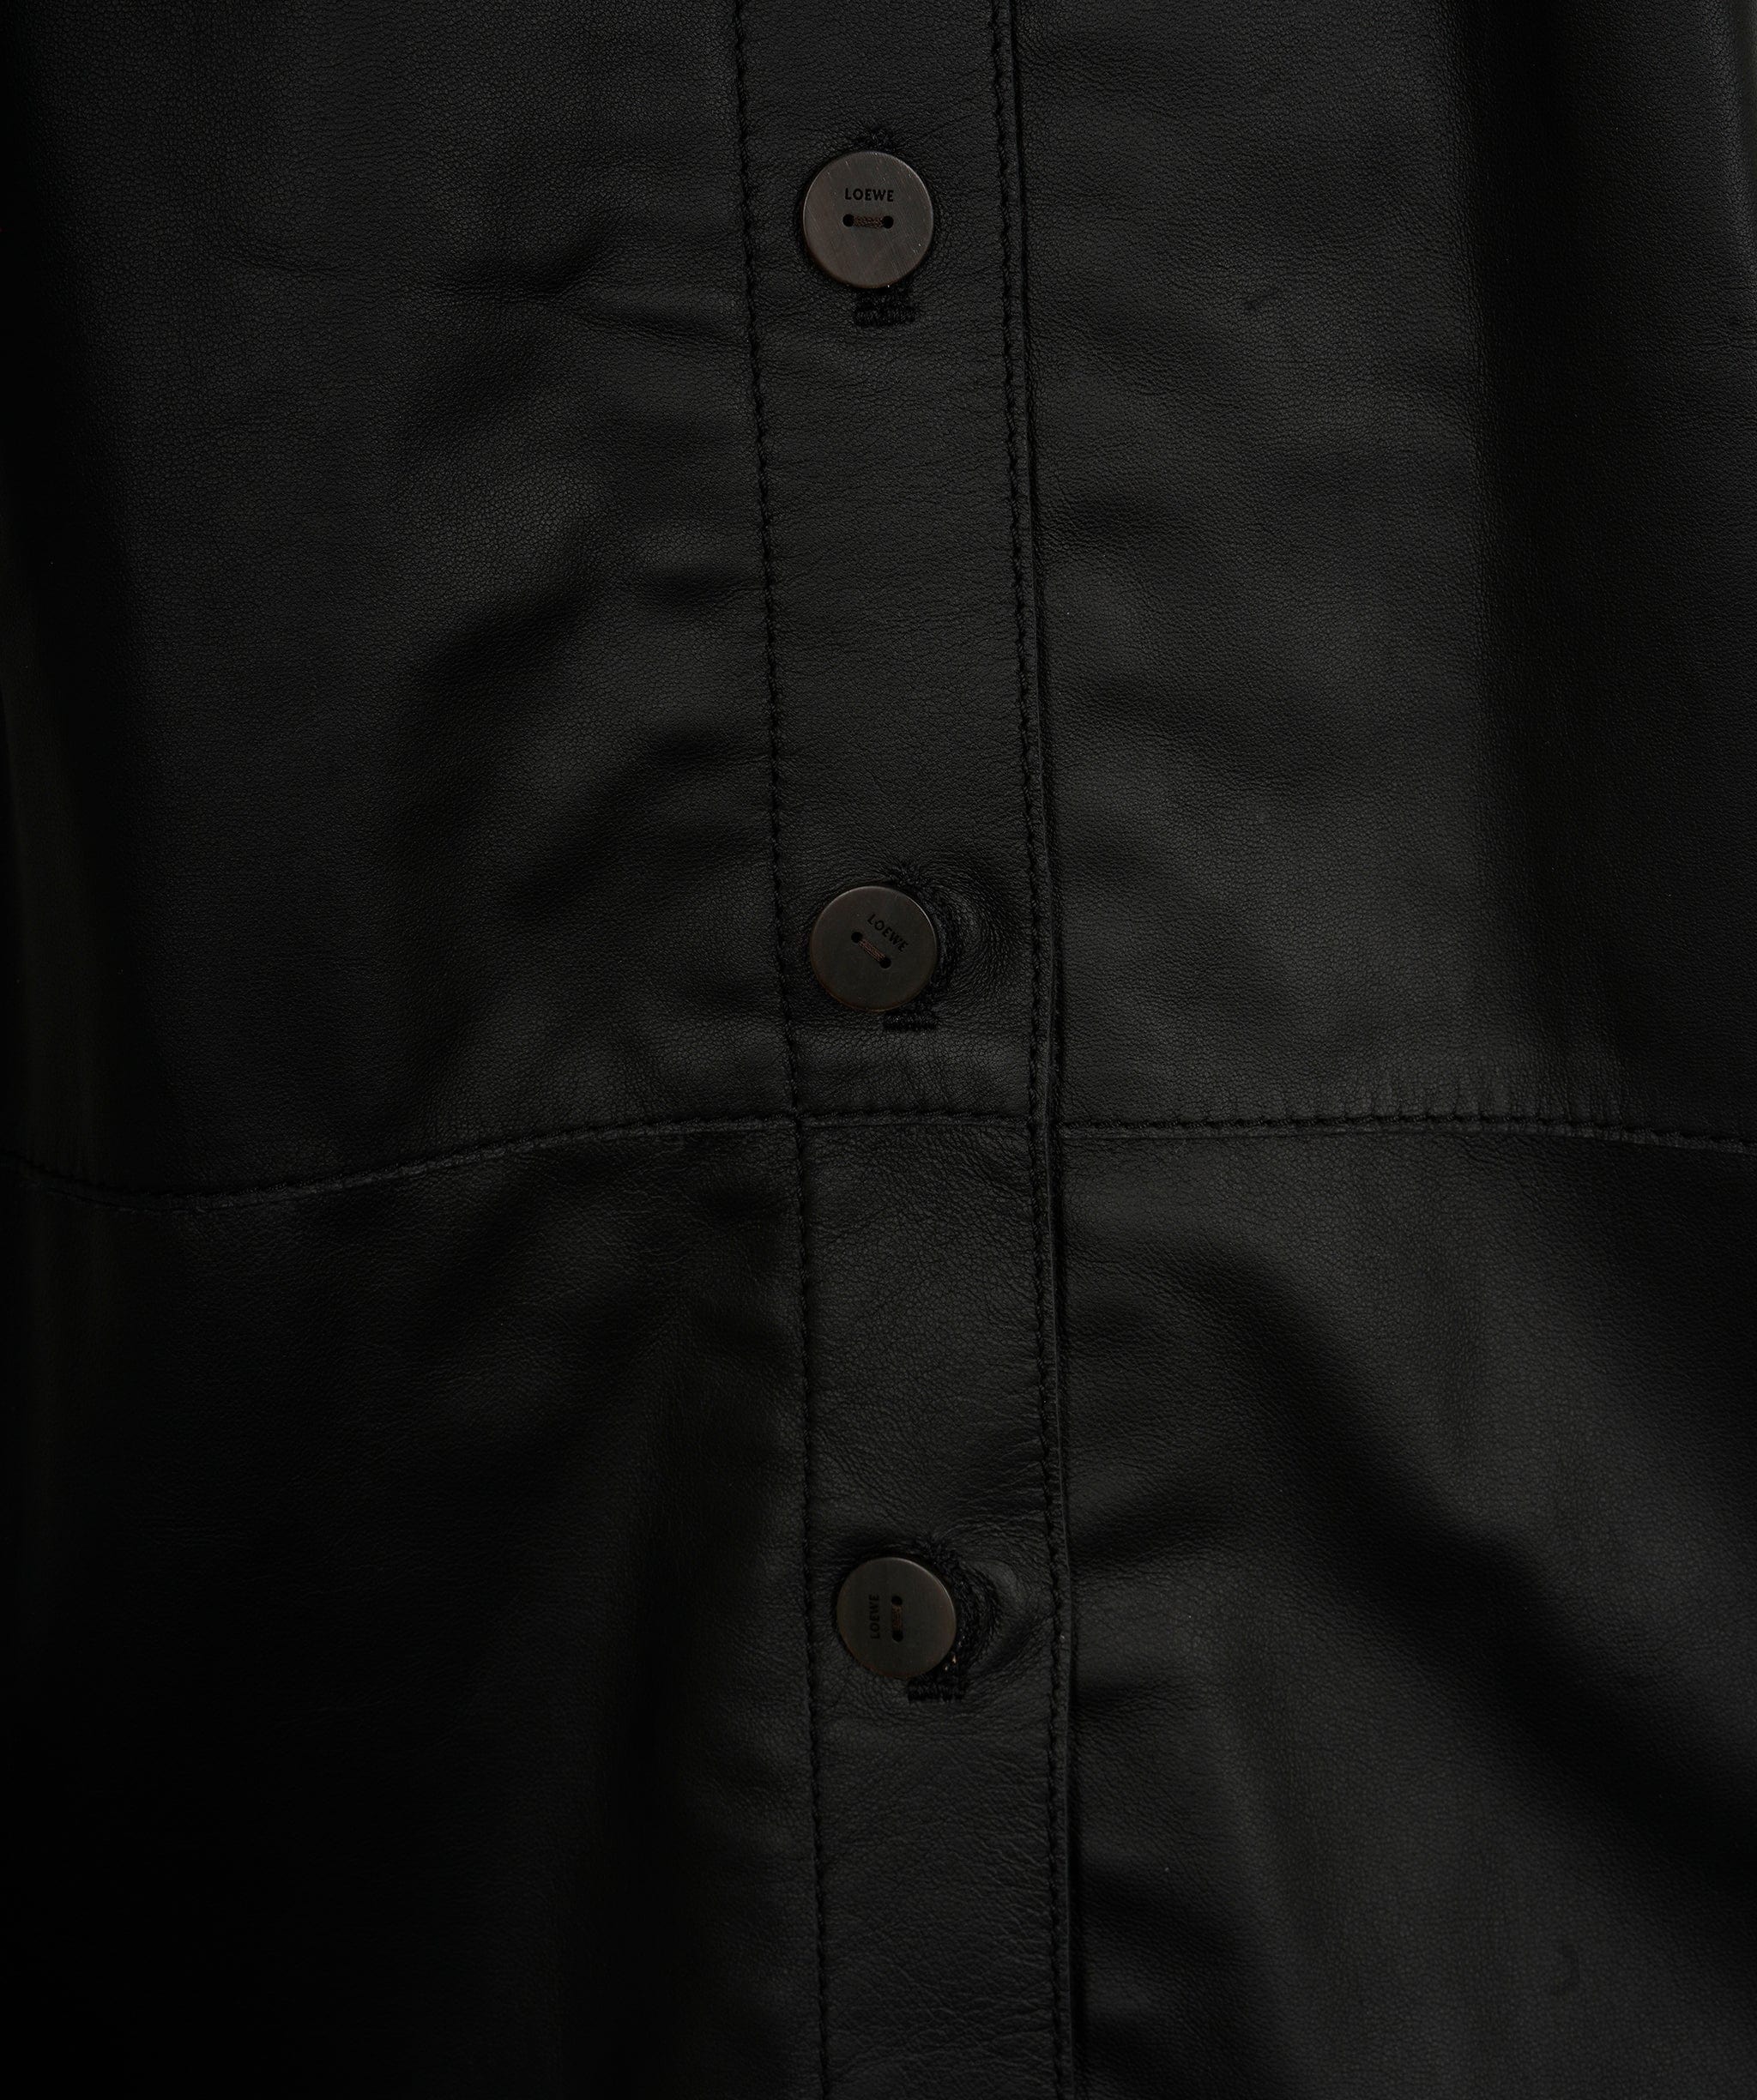 Loewe Loewe bi black & white leather shirt - AJC0418